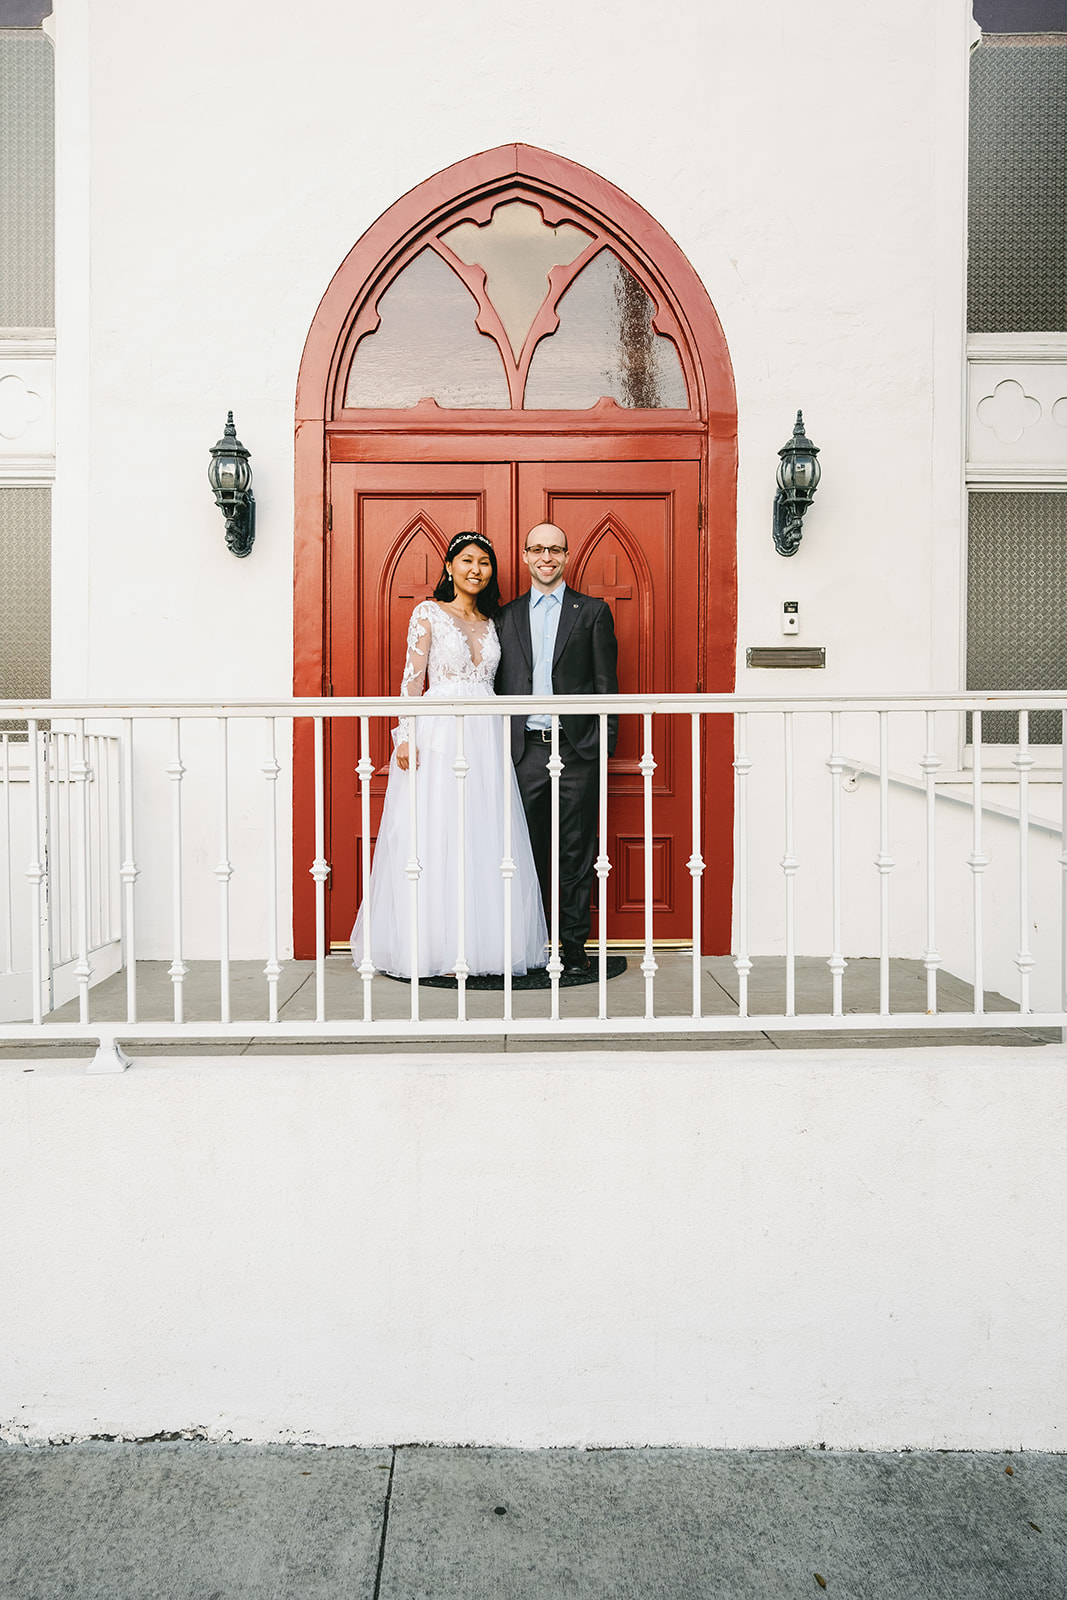 Intimate wedding at Little White Church in Pasadena, California.